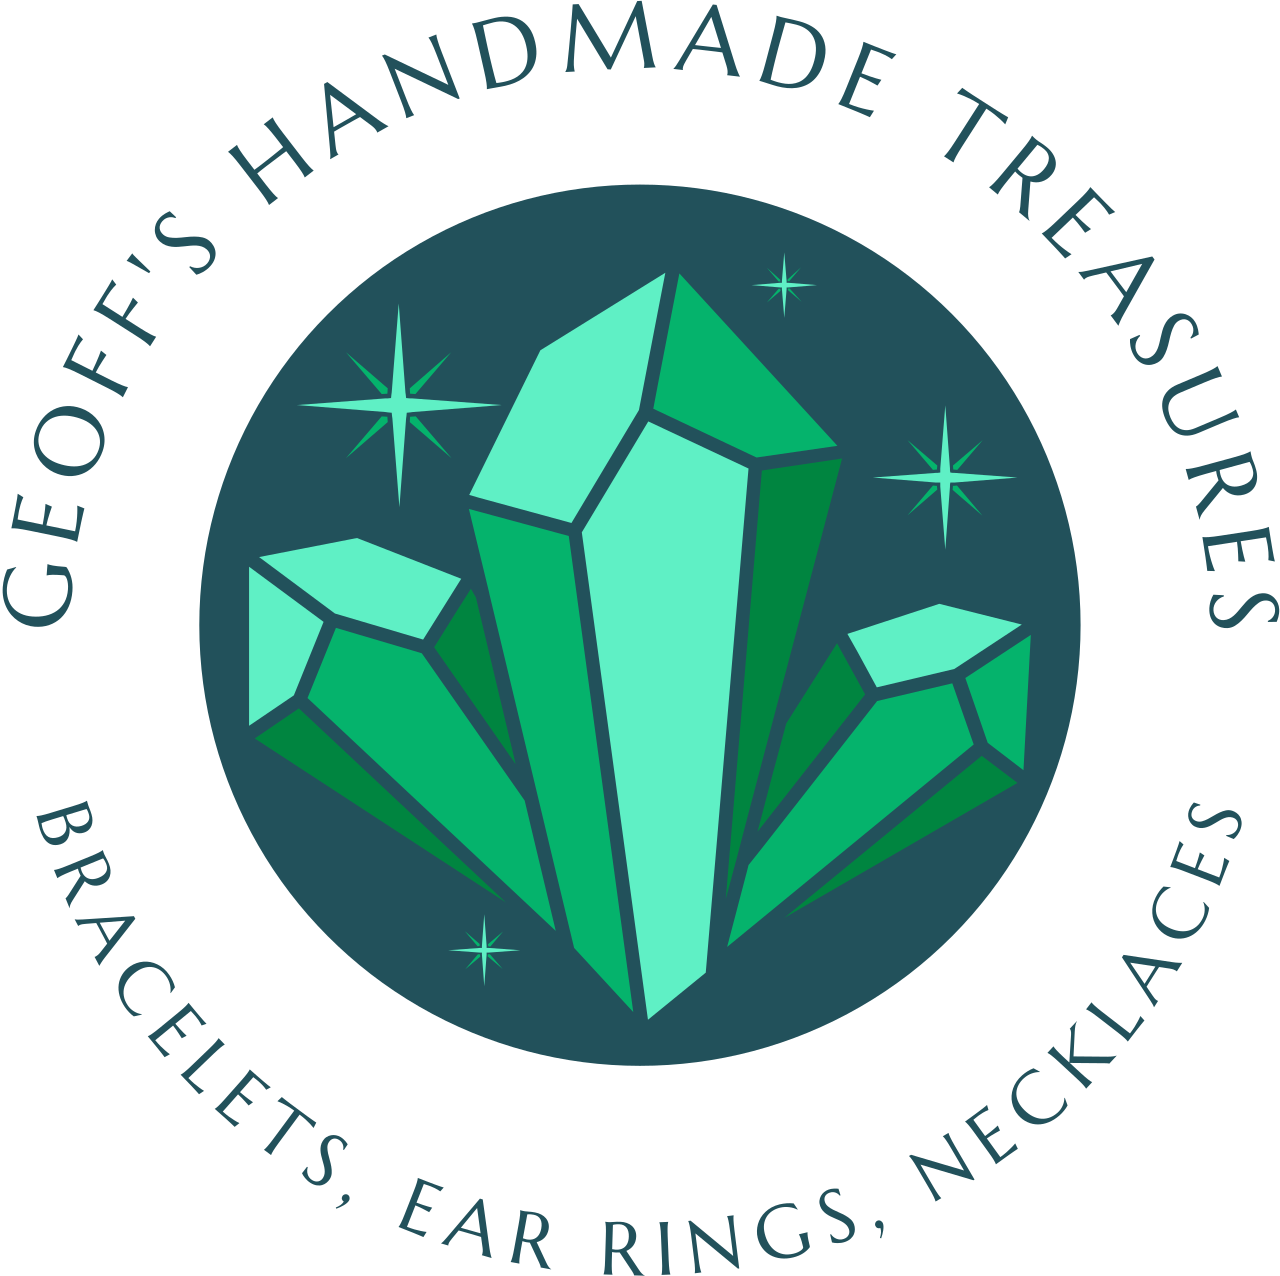 GEOFF'S HANDMADE TREASURES's logo